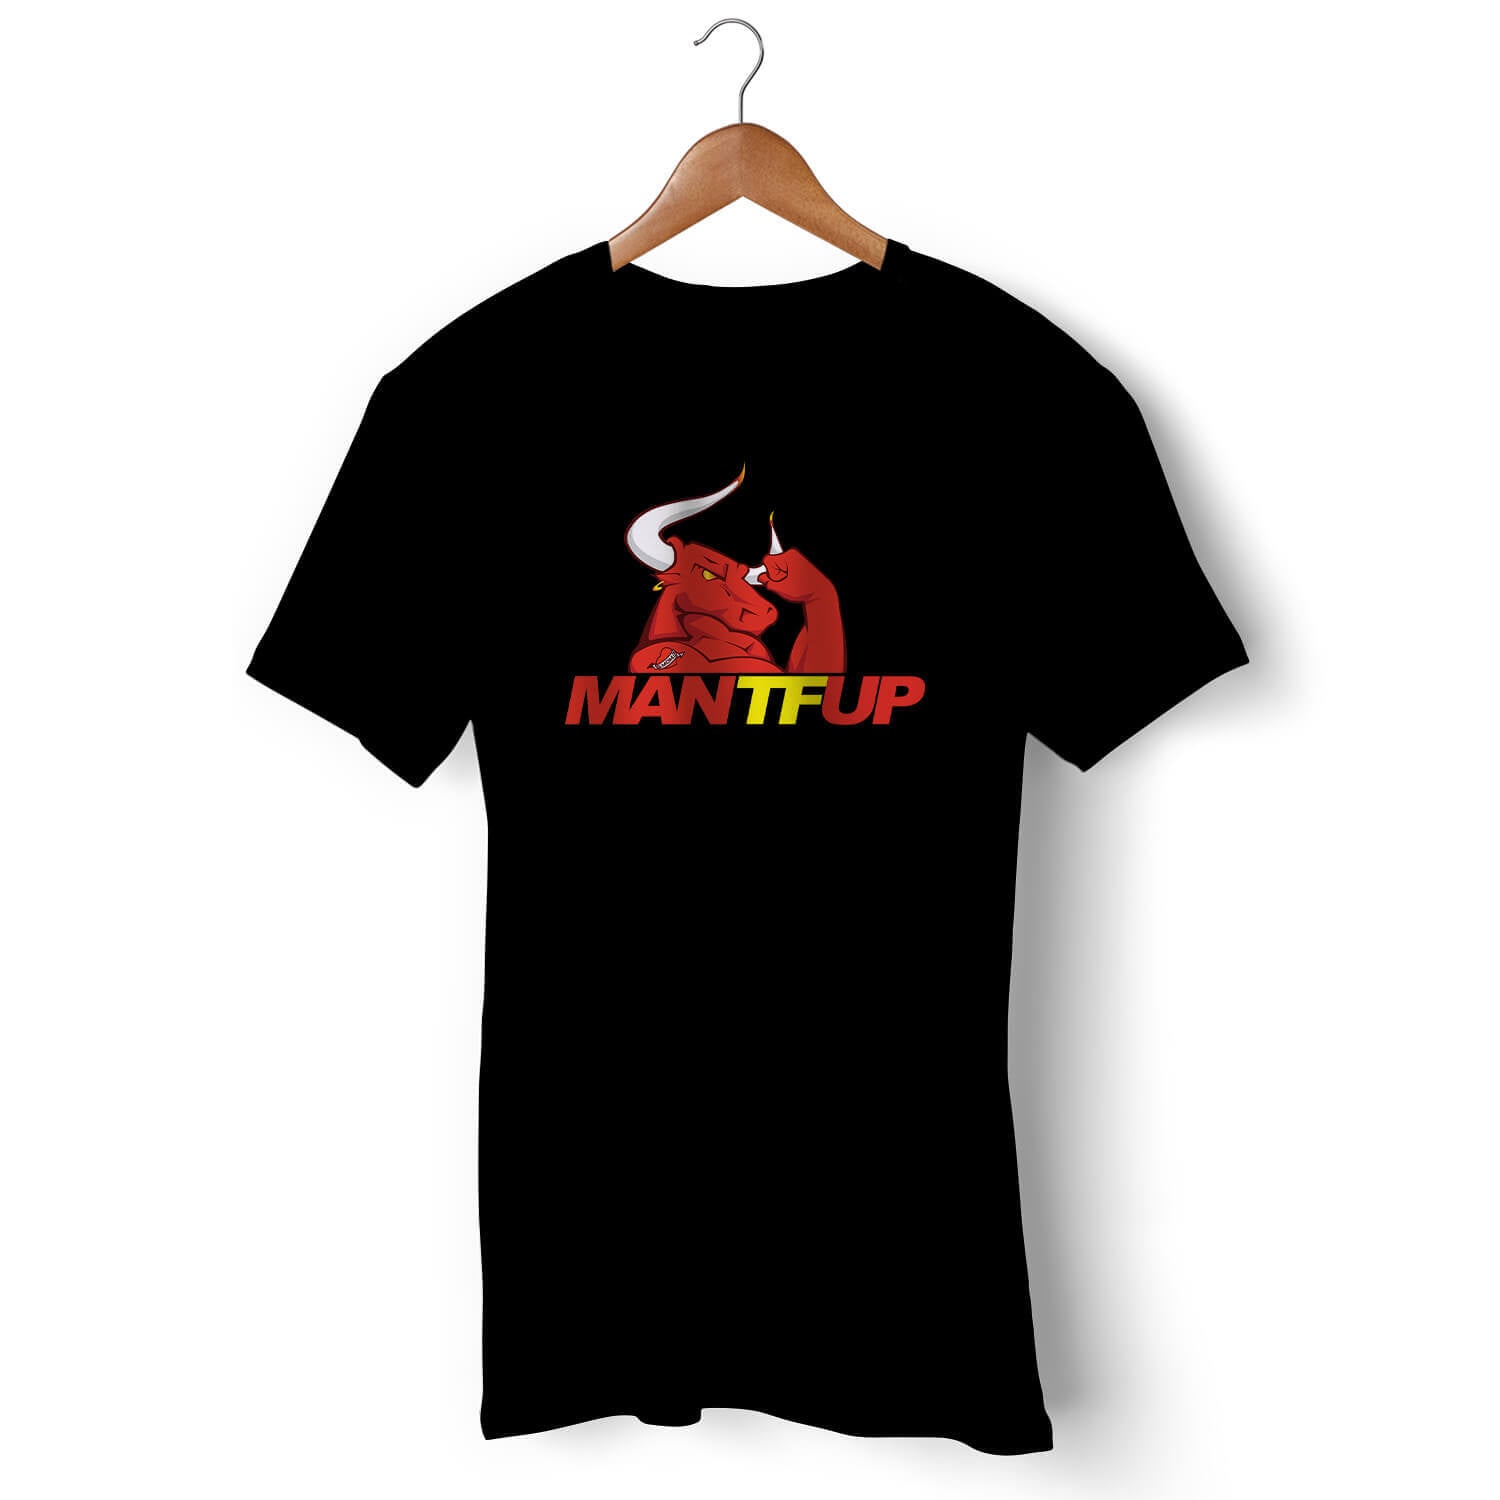 MANTFUP Men's Black Crew Neck T-Shirt